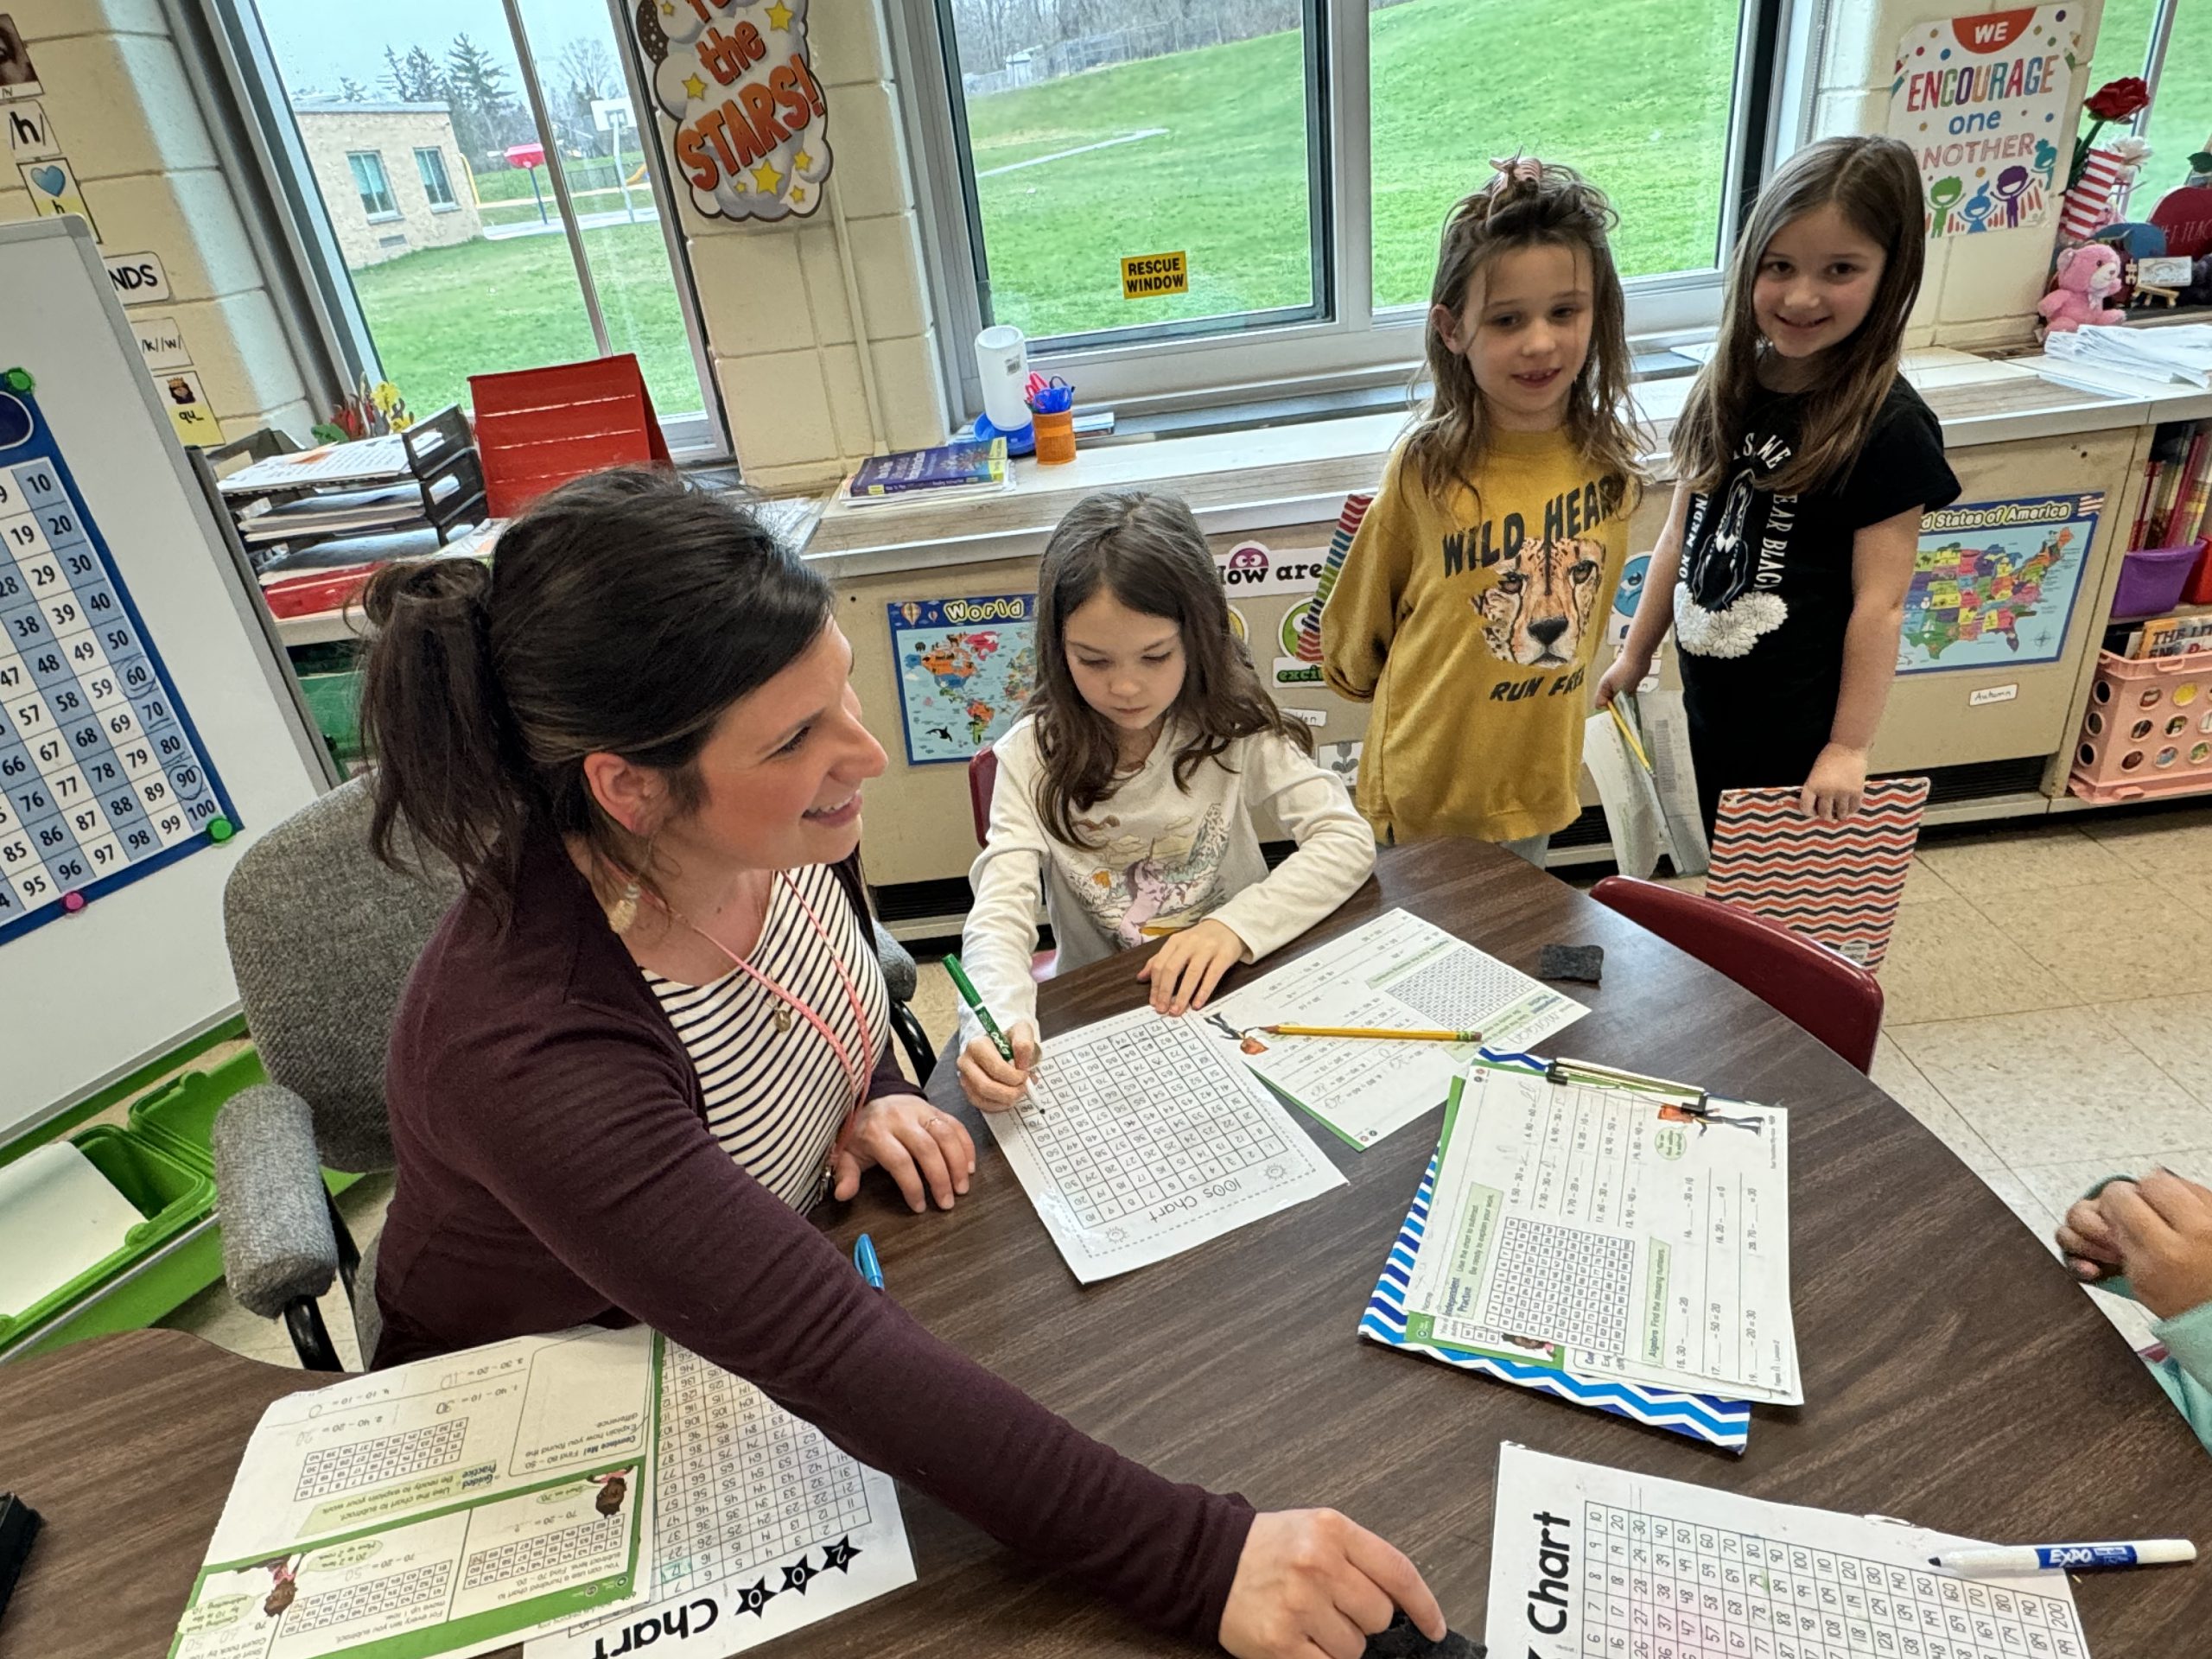 Three students gather at an elementary teacher's desk